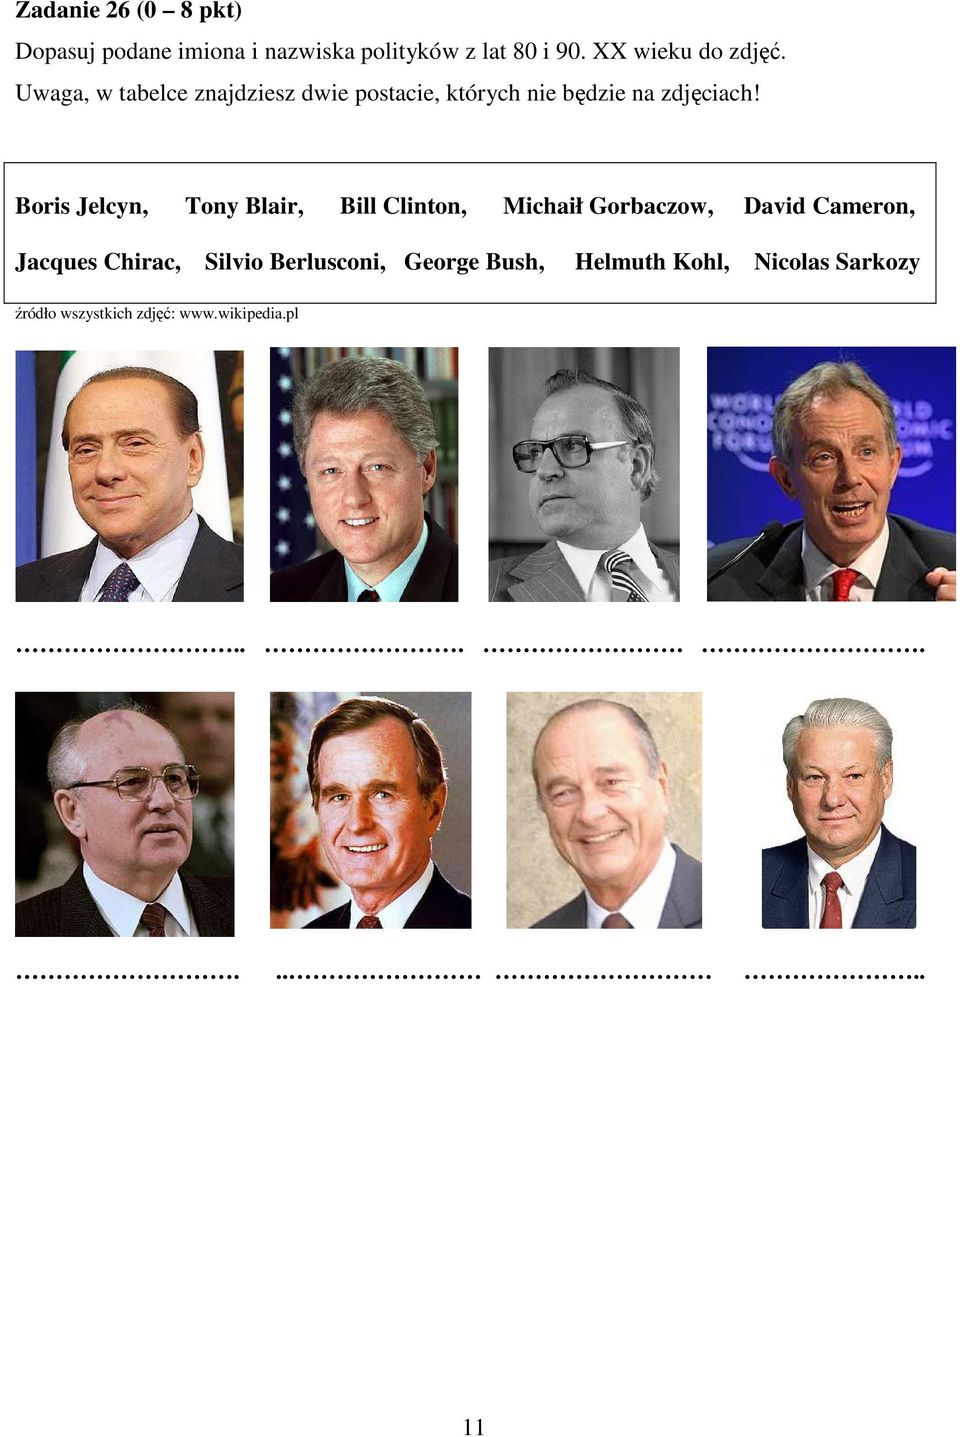 Boris Jelcyn, Tony Blair, Bill Clinton, Michaił Gorbaczow, David Cameron, Jacques Chirac,